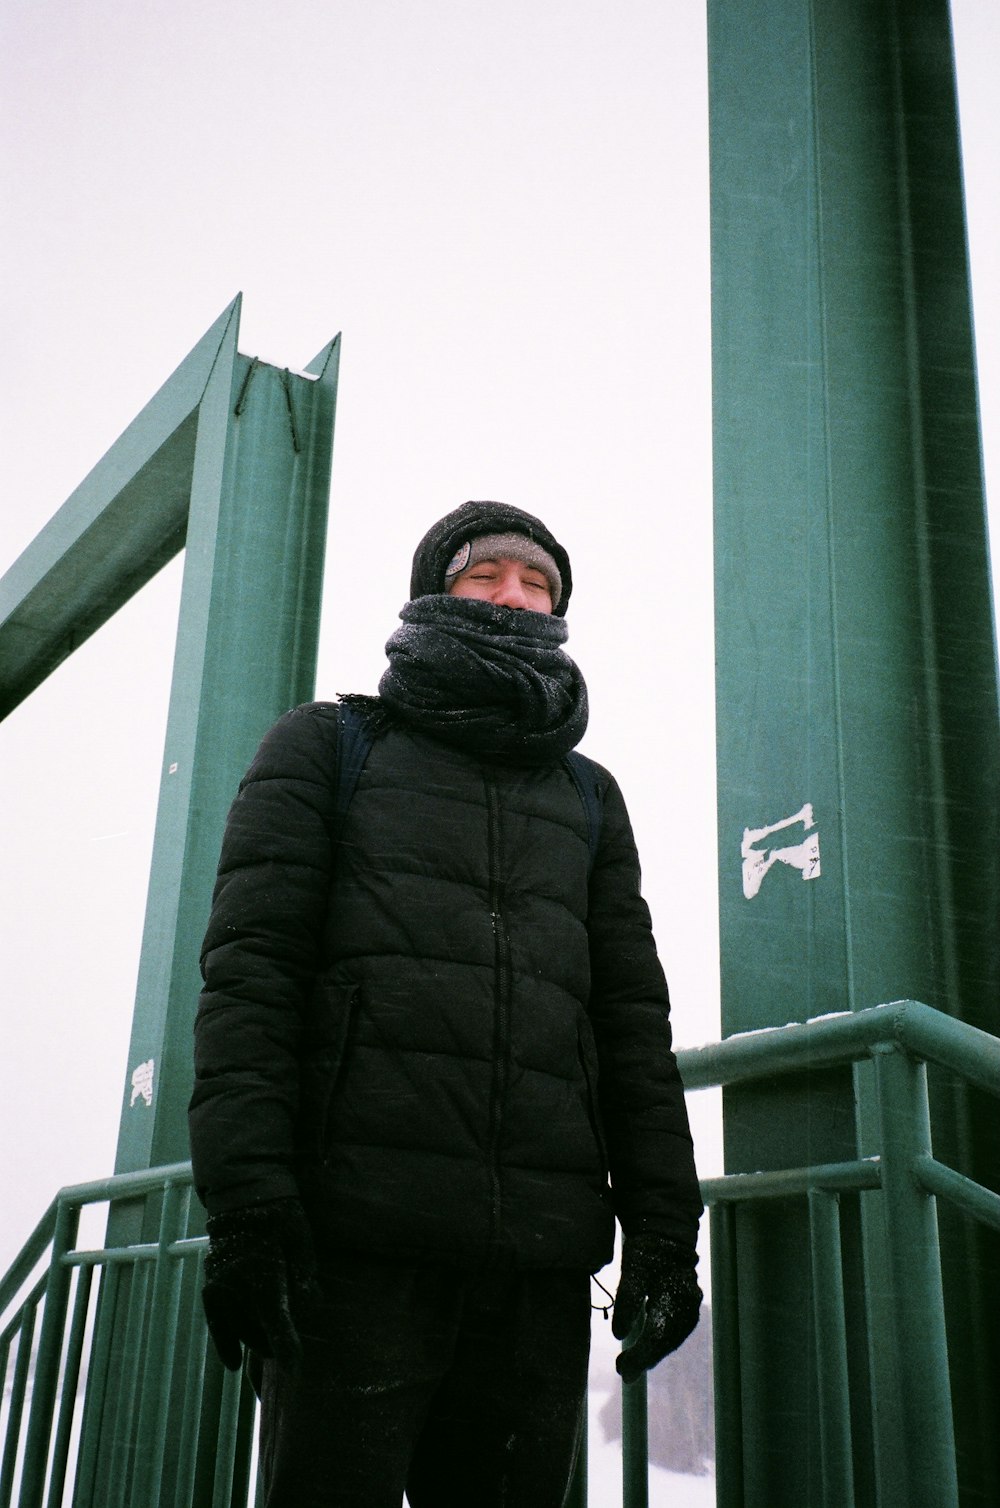 man in black jacket standing near green metal post